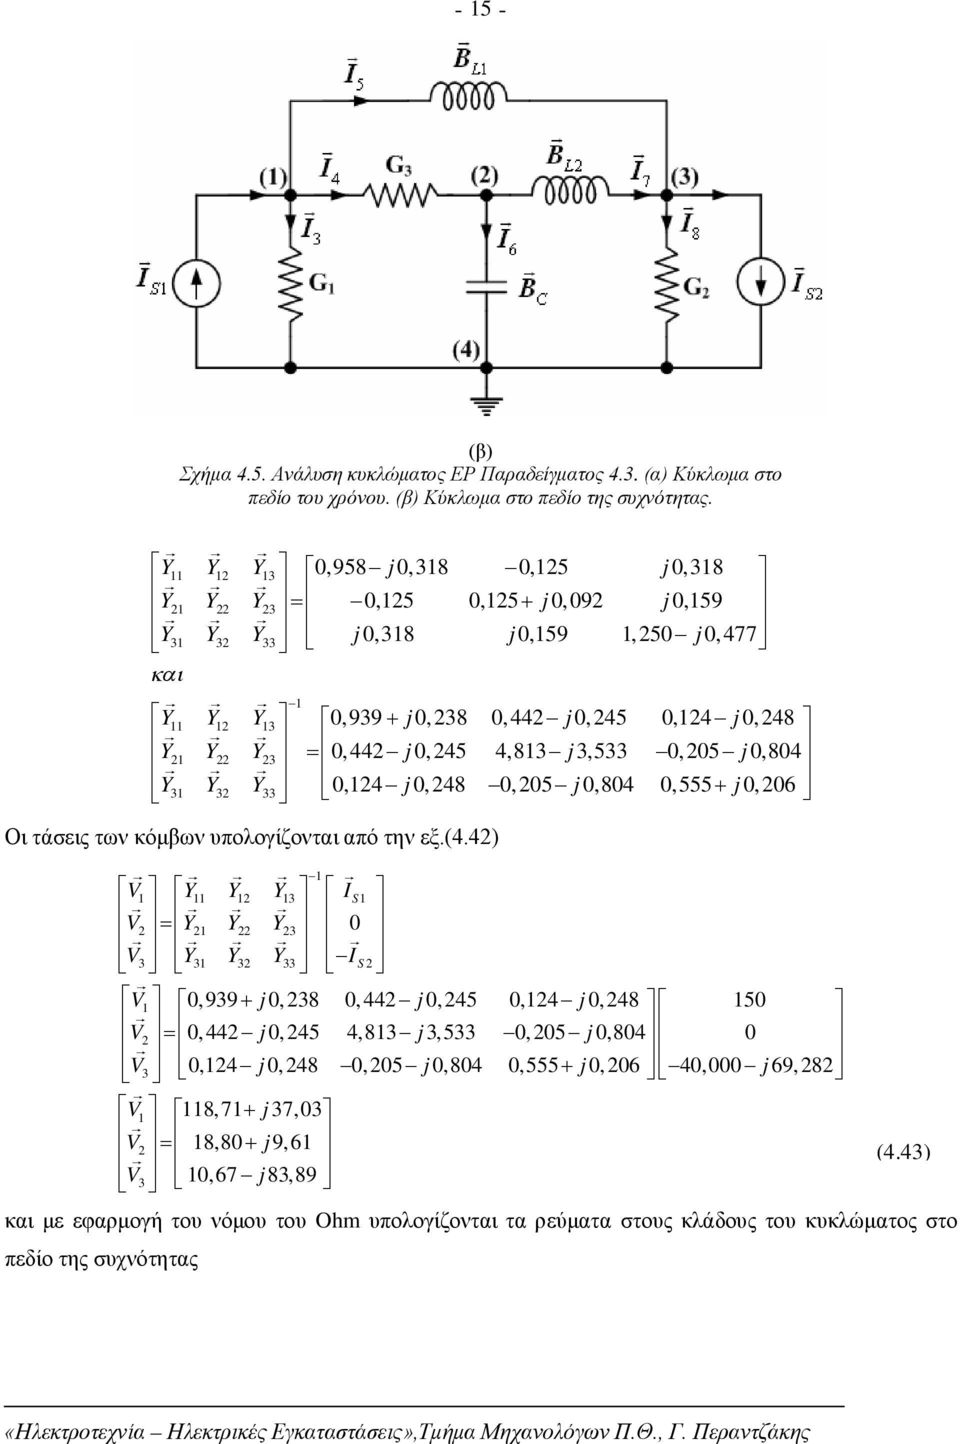 j, 6 Οι τάσεις των κόμβων υπολογίζονται από την εξ.(4.